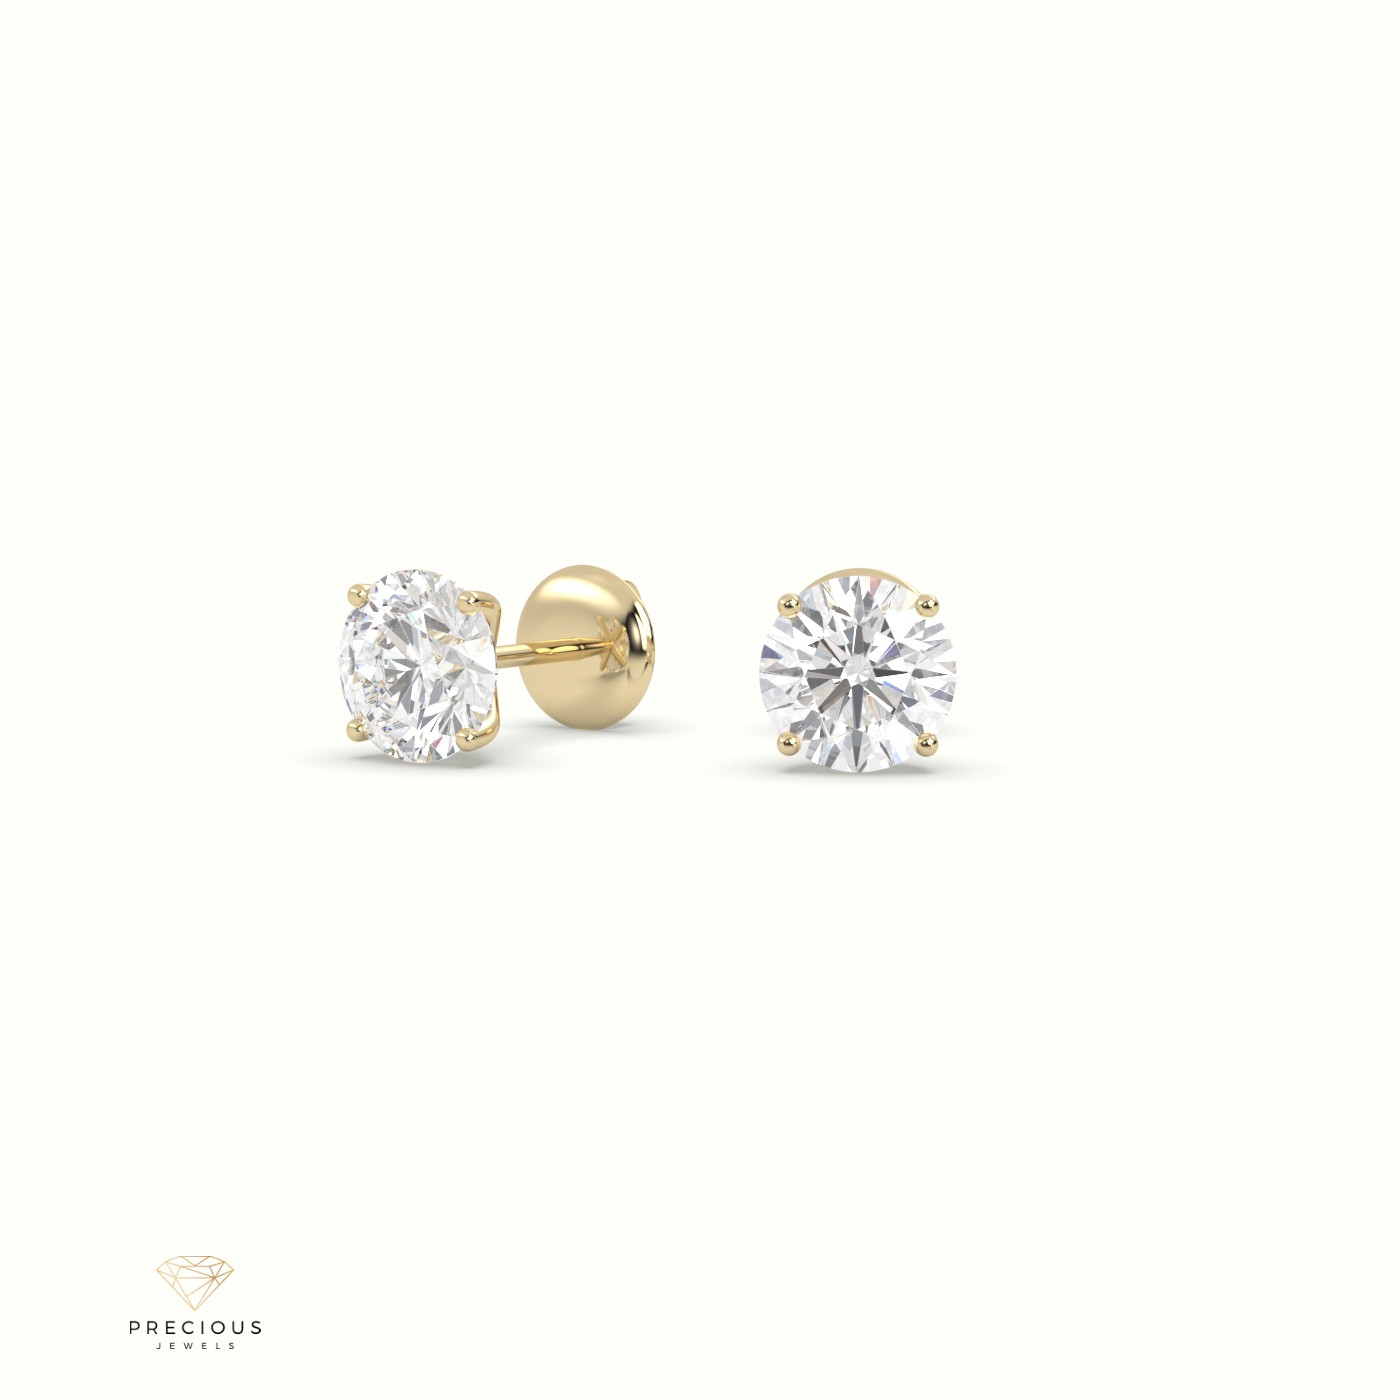 18k yellow gold 4 prongs round diamond studs earrings - free setting